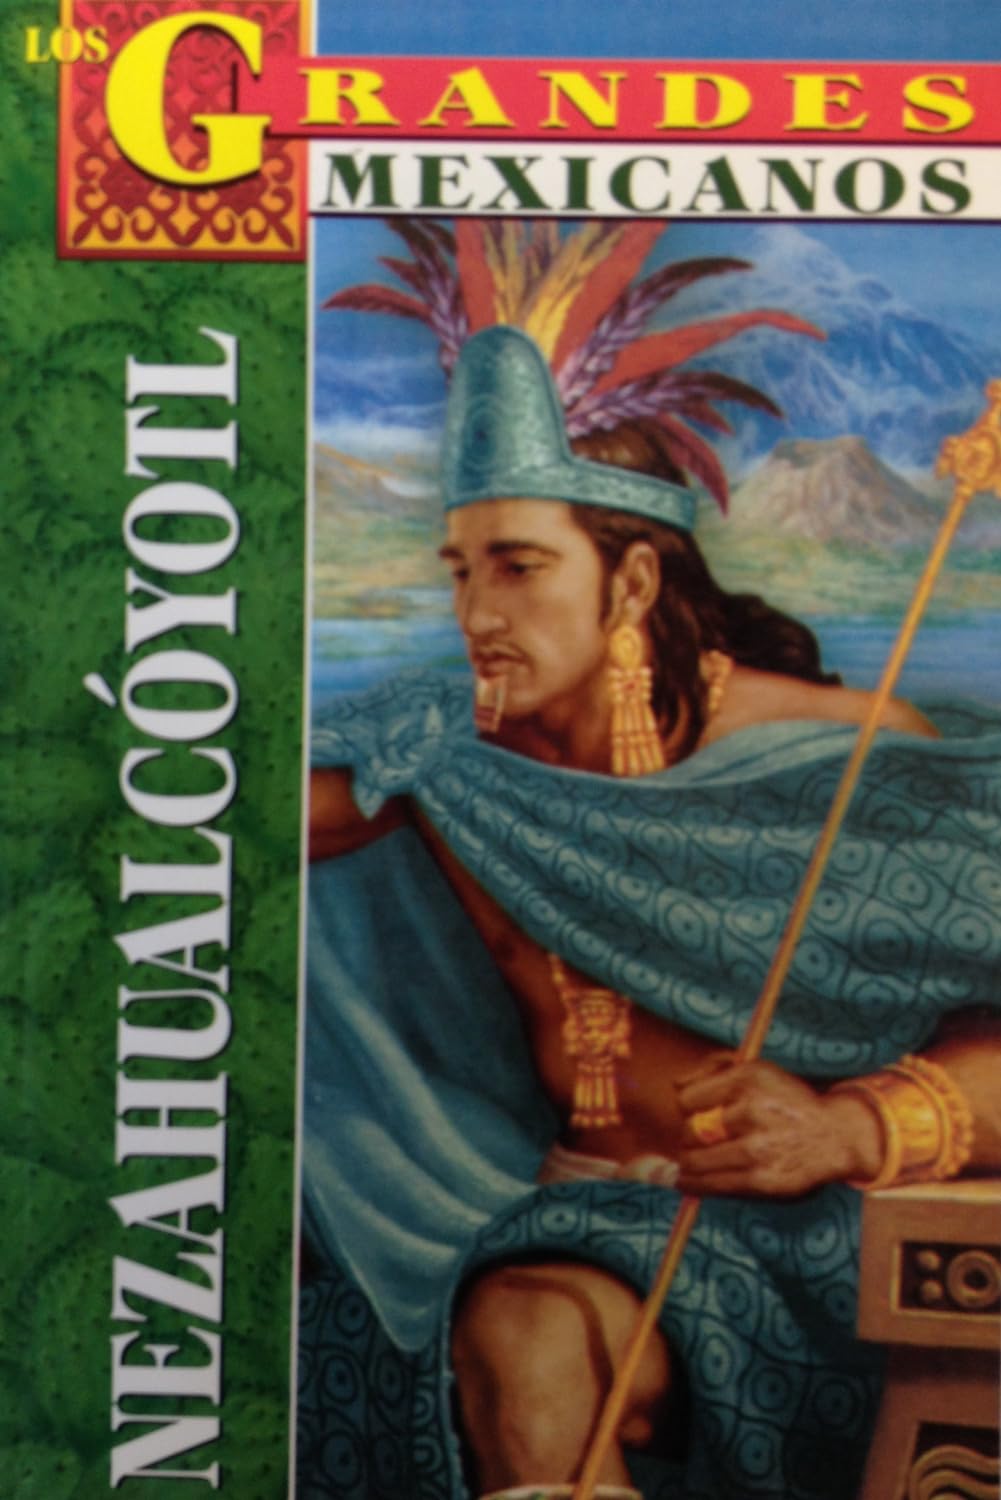 Los Grandes - Nezahualcoyotl (Greatest Mexicans) (Spanish Edition)